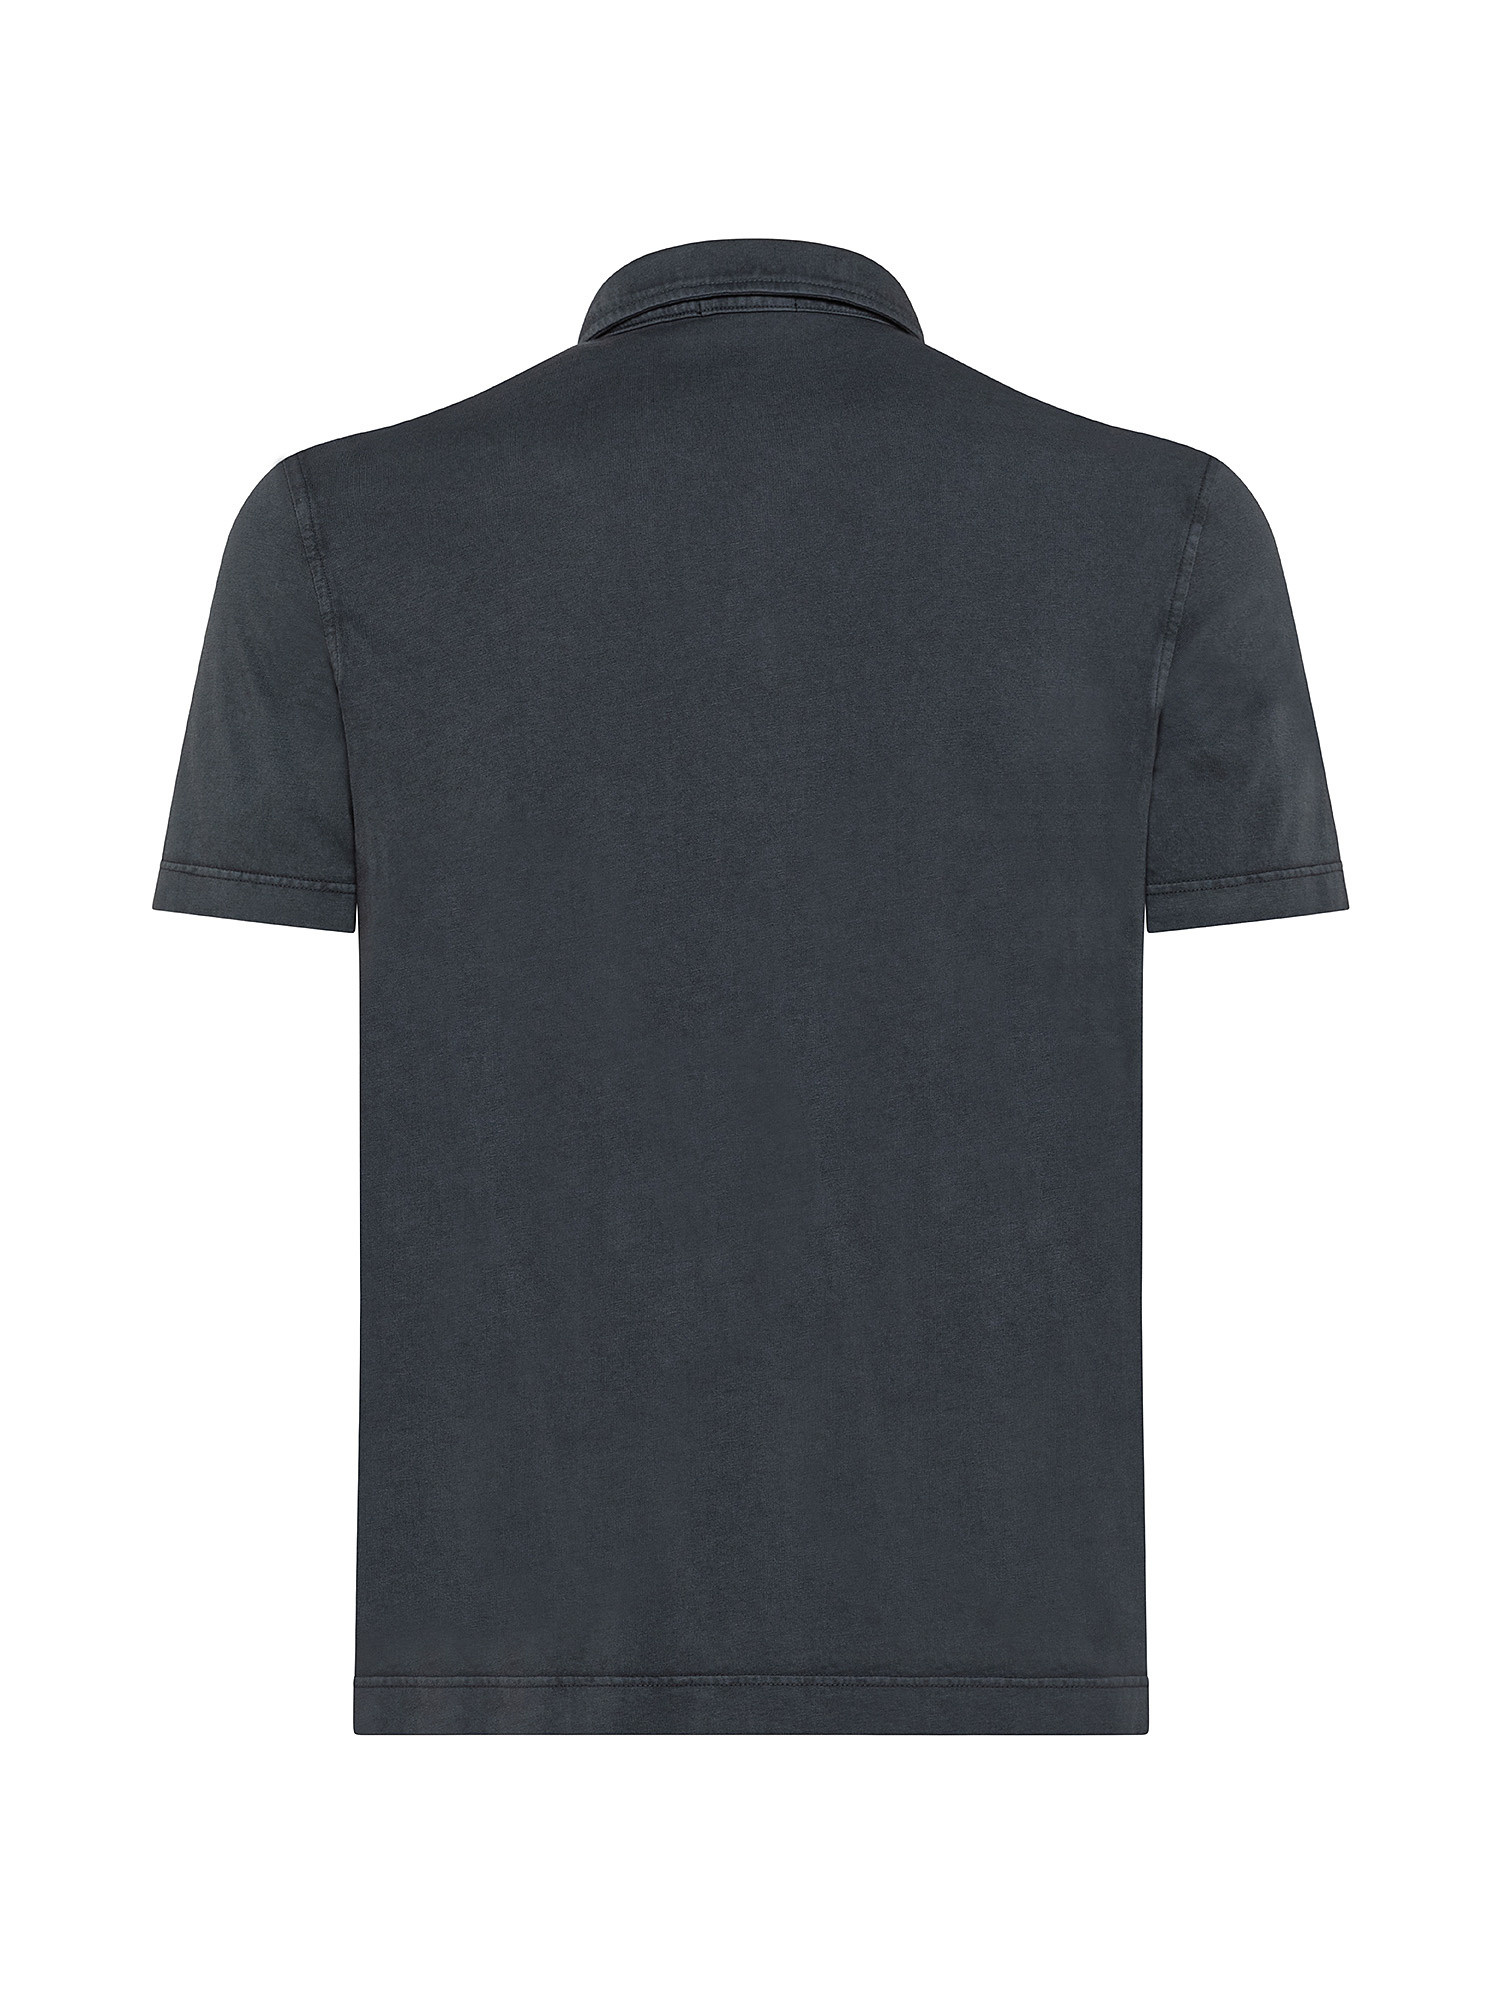 Polo shirt, Grey, large image number 1